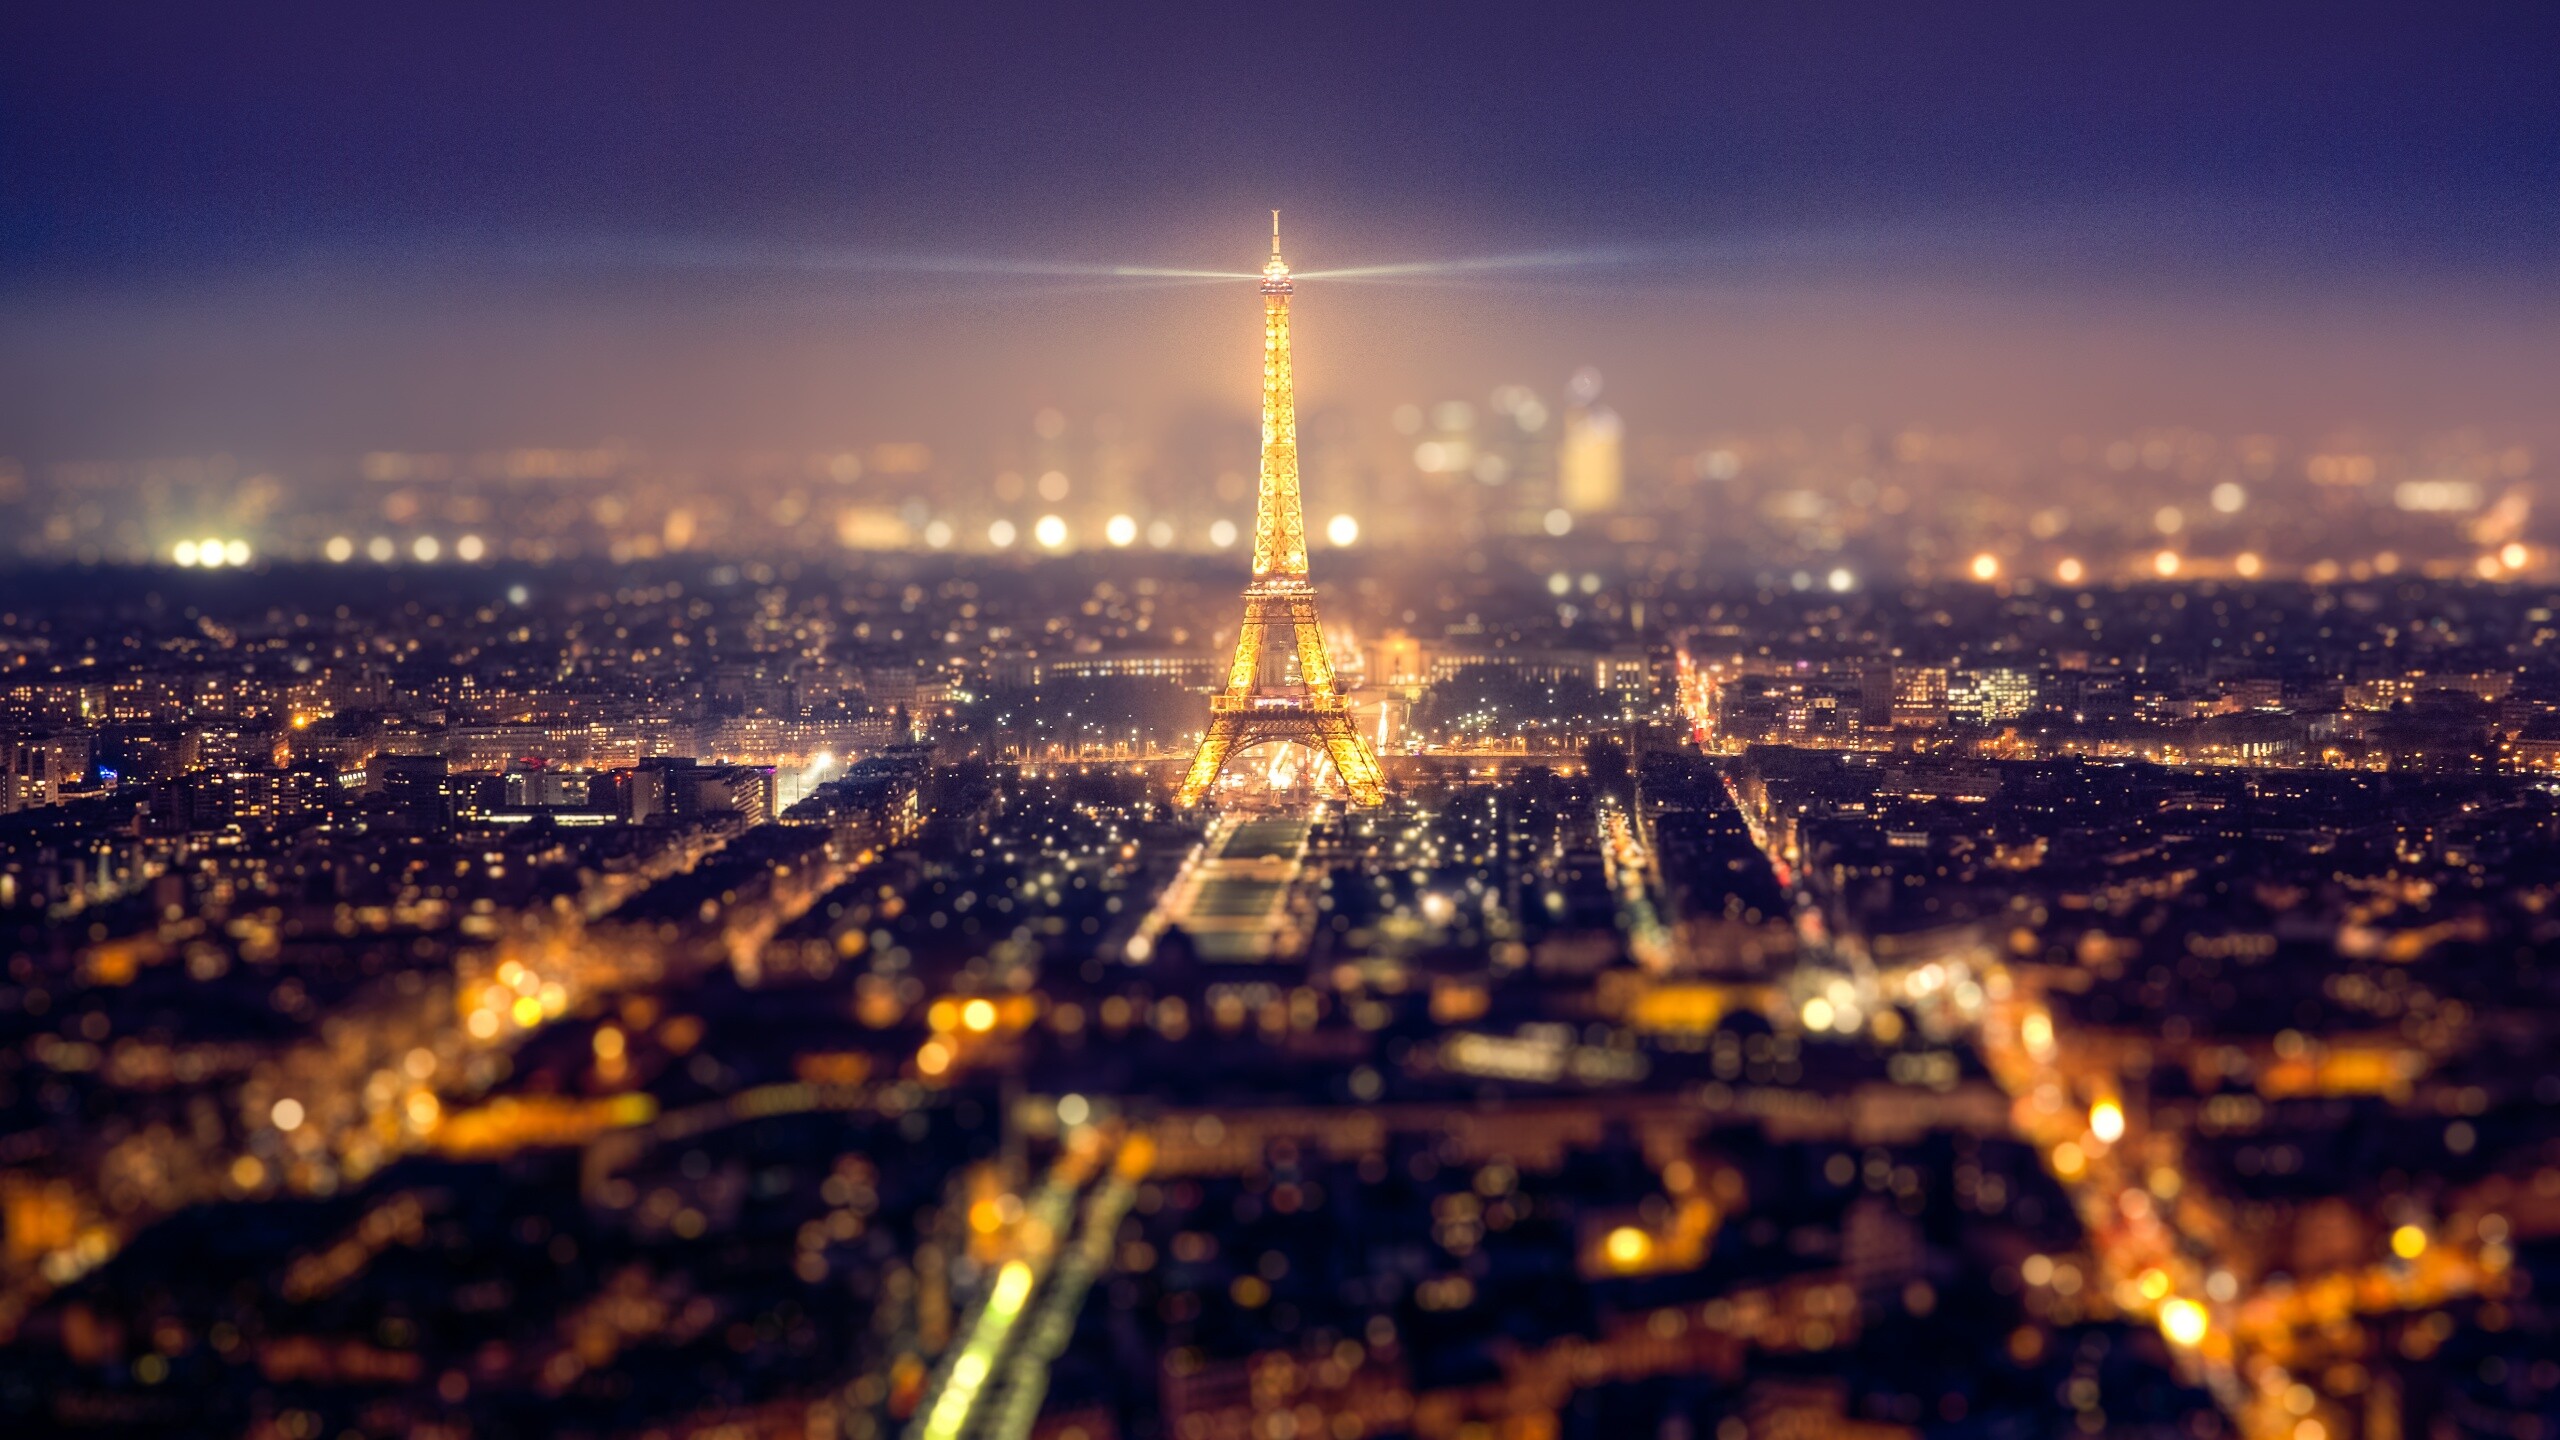 Gold Lights: Night in the city of Paris, Eiffel Tower's golden glittering lighting, The City of Lights. 2560x1440 HD Wallpaper.